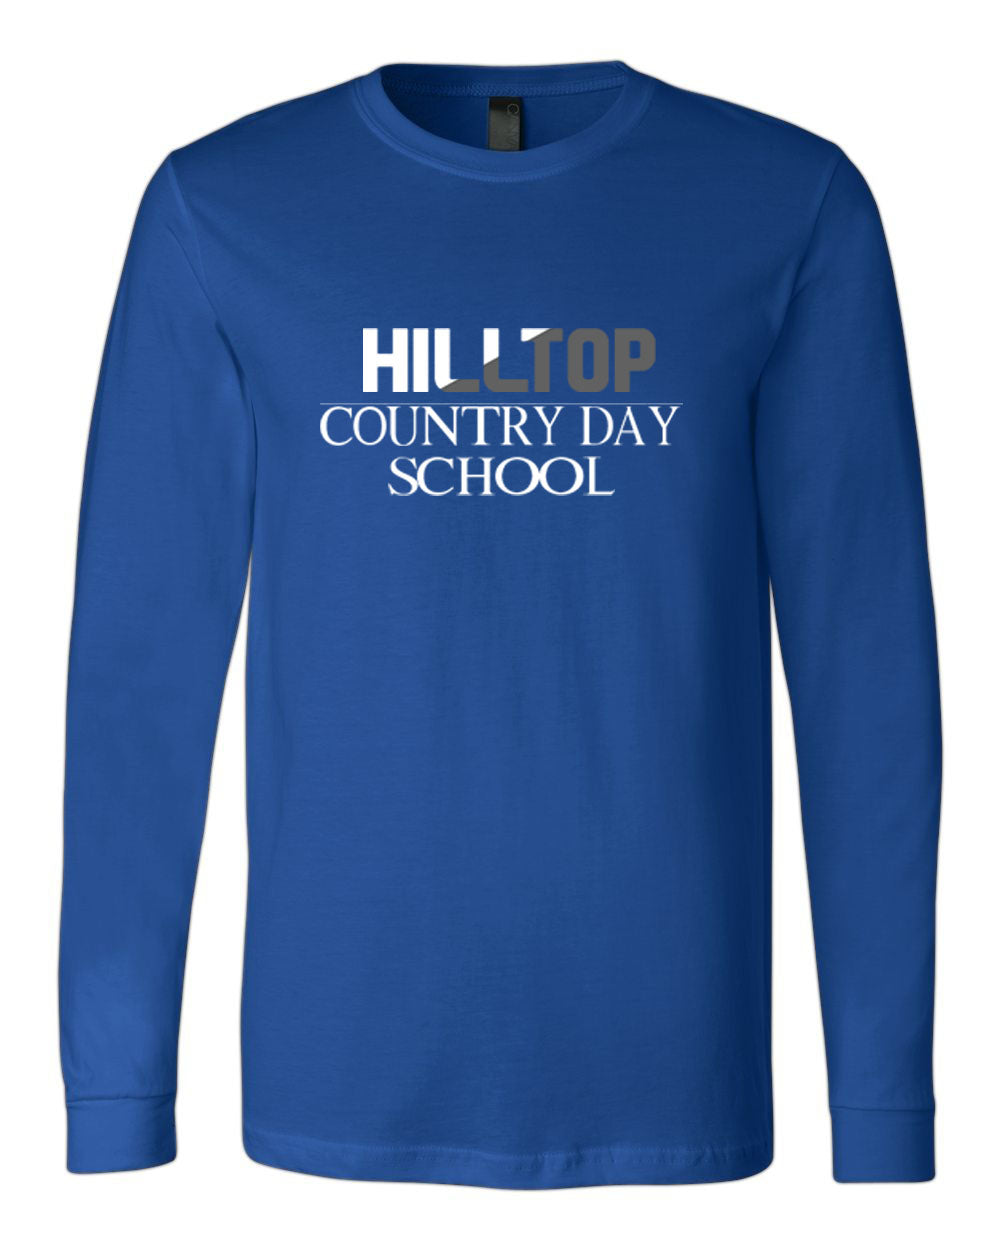 Hilltop Country Day School design 4 Long Sleeve Shirt